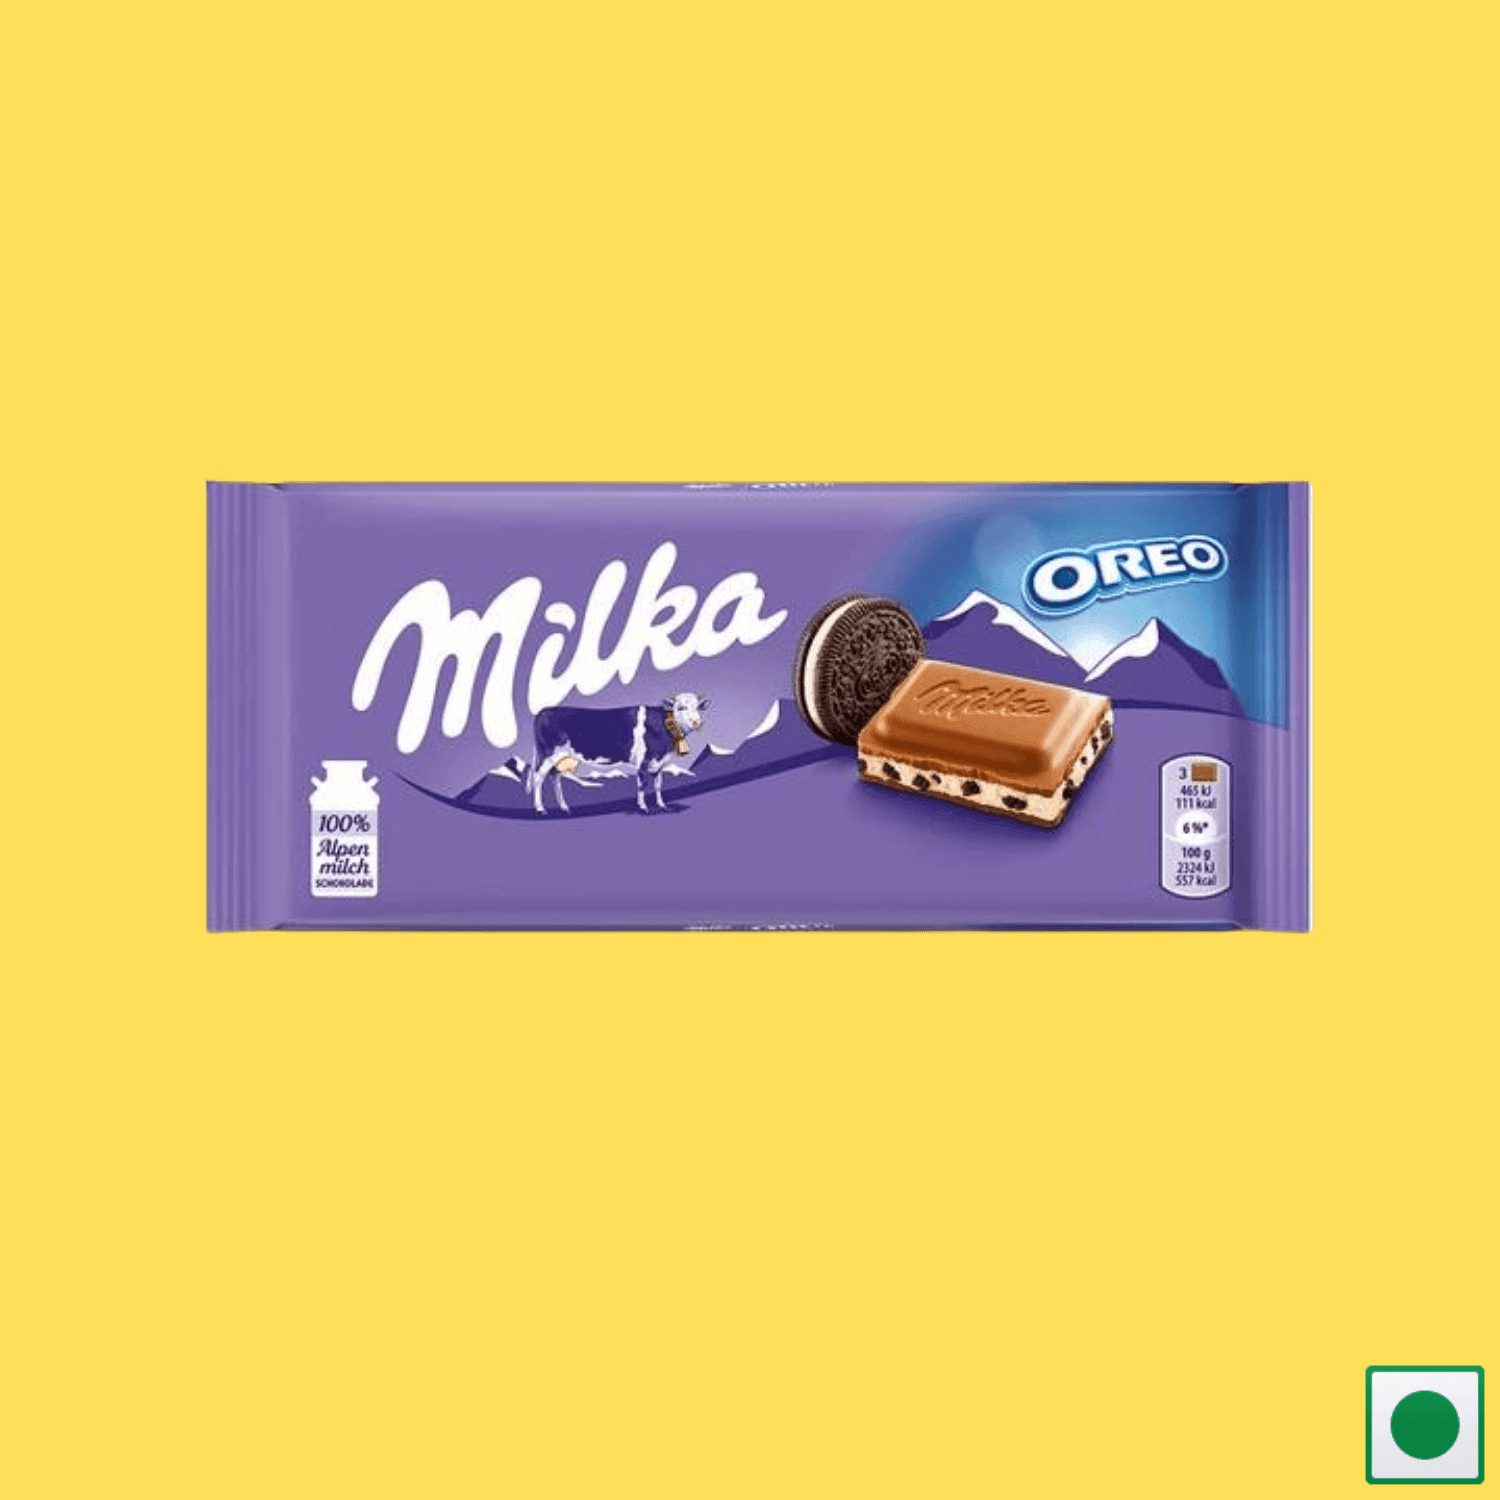 Milka Oreo – Chocolate & More Delights, chocolat milka